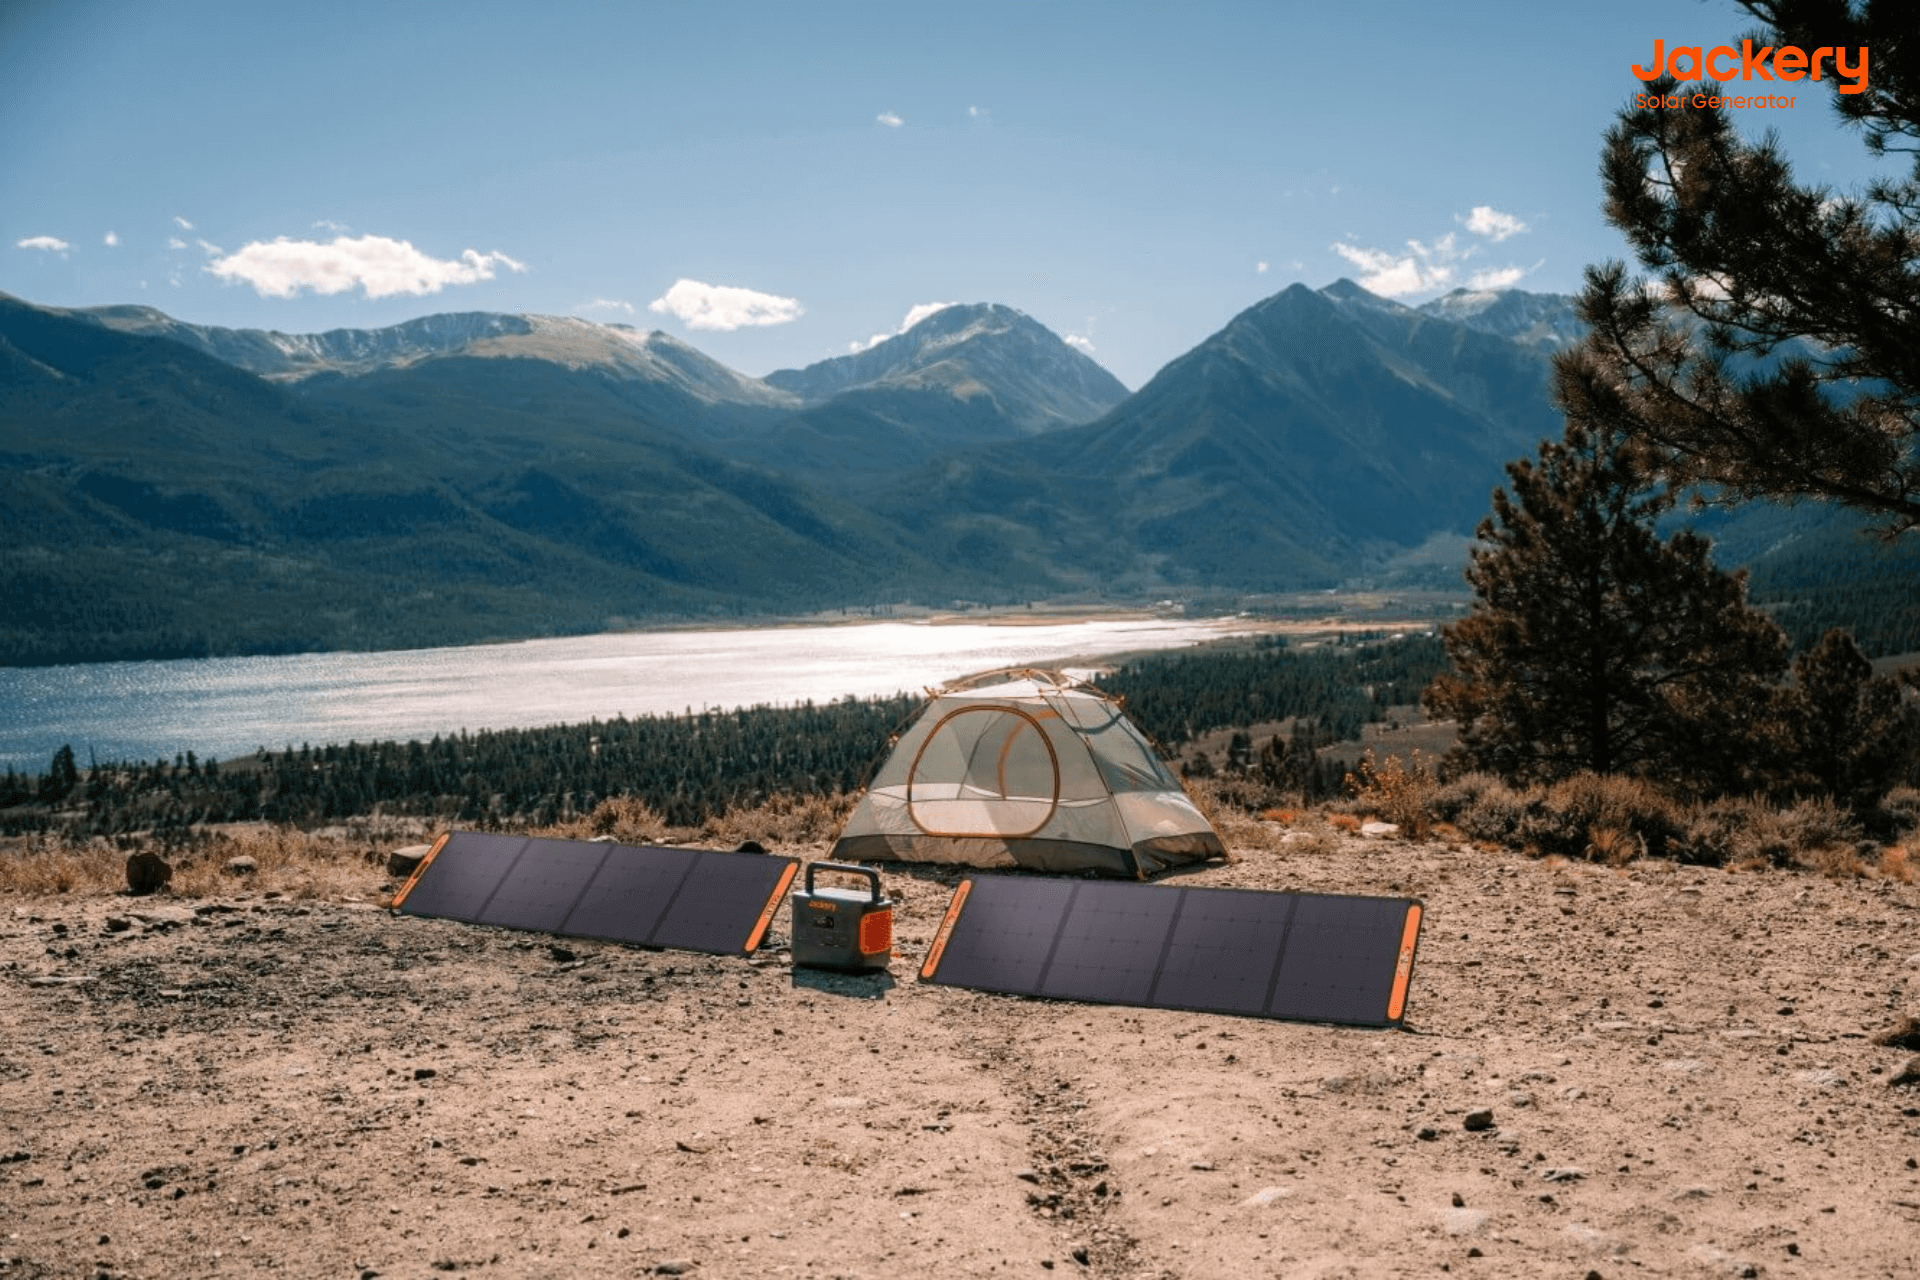 Jackery solar generator for dispersed camping